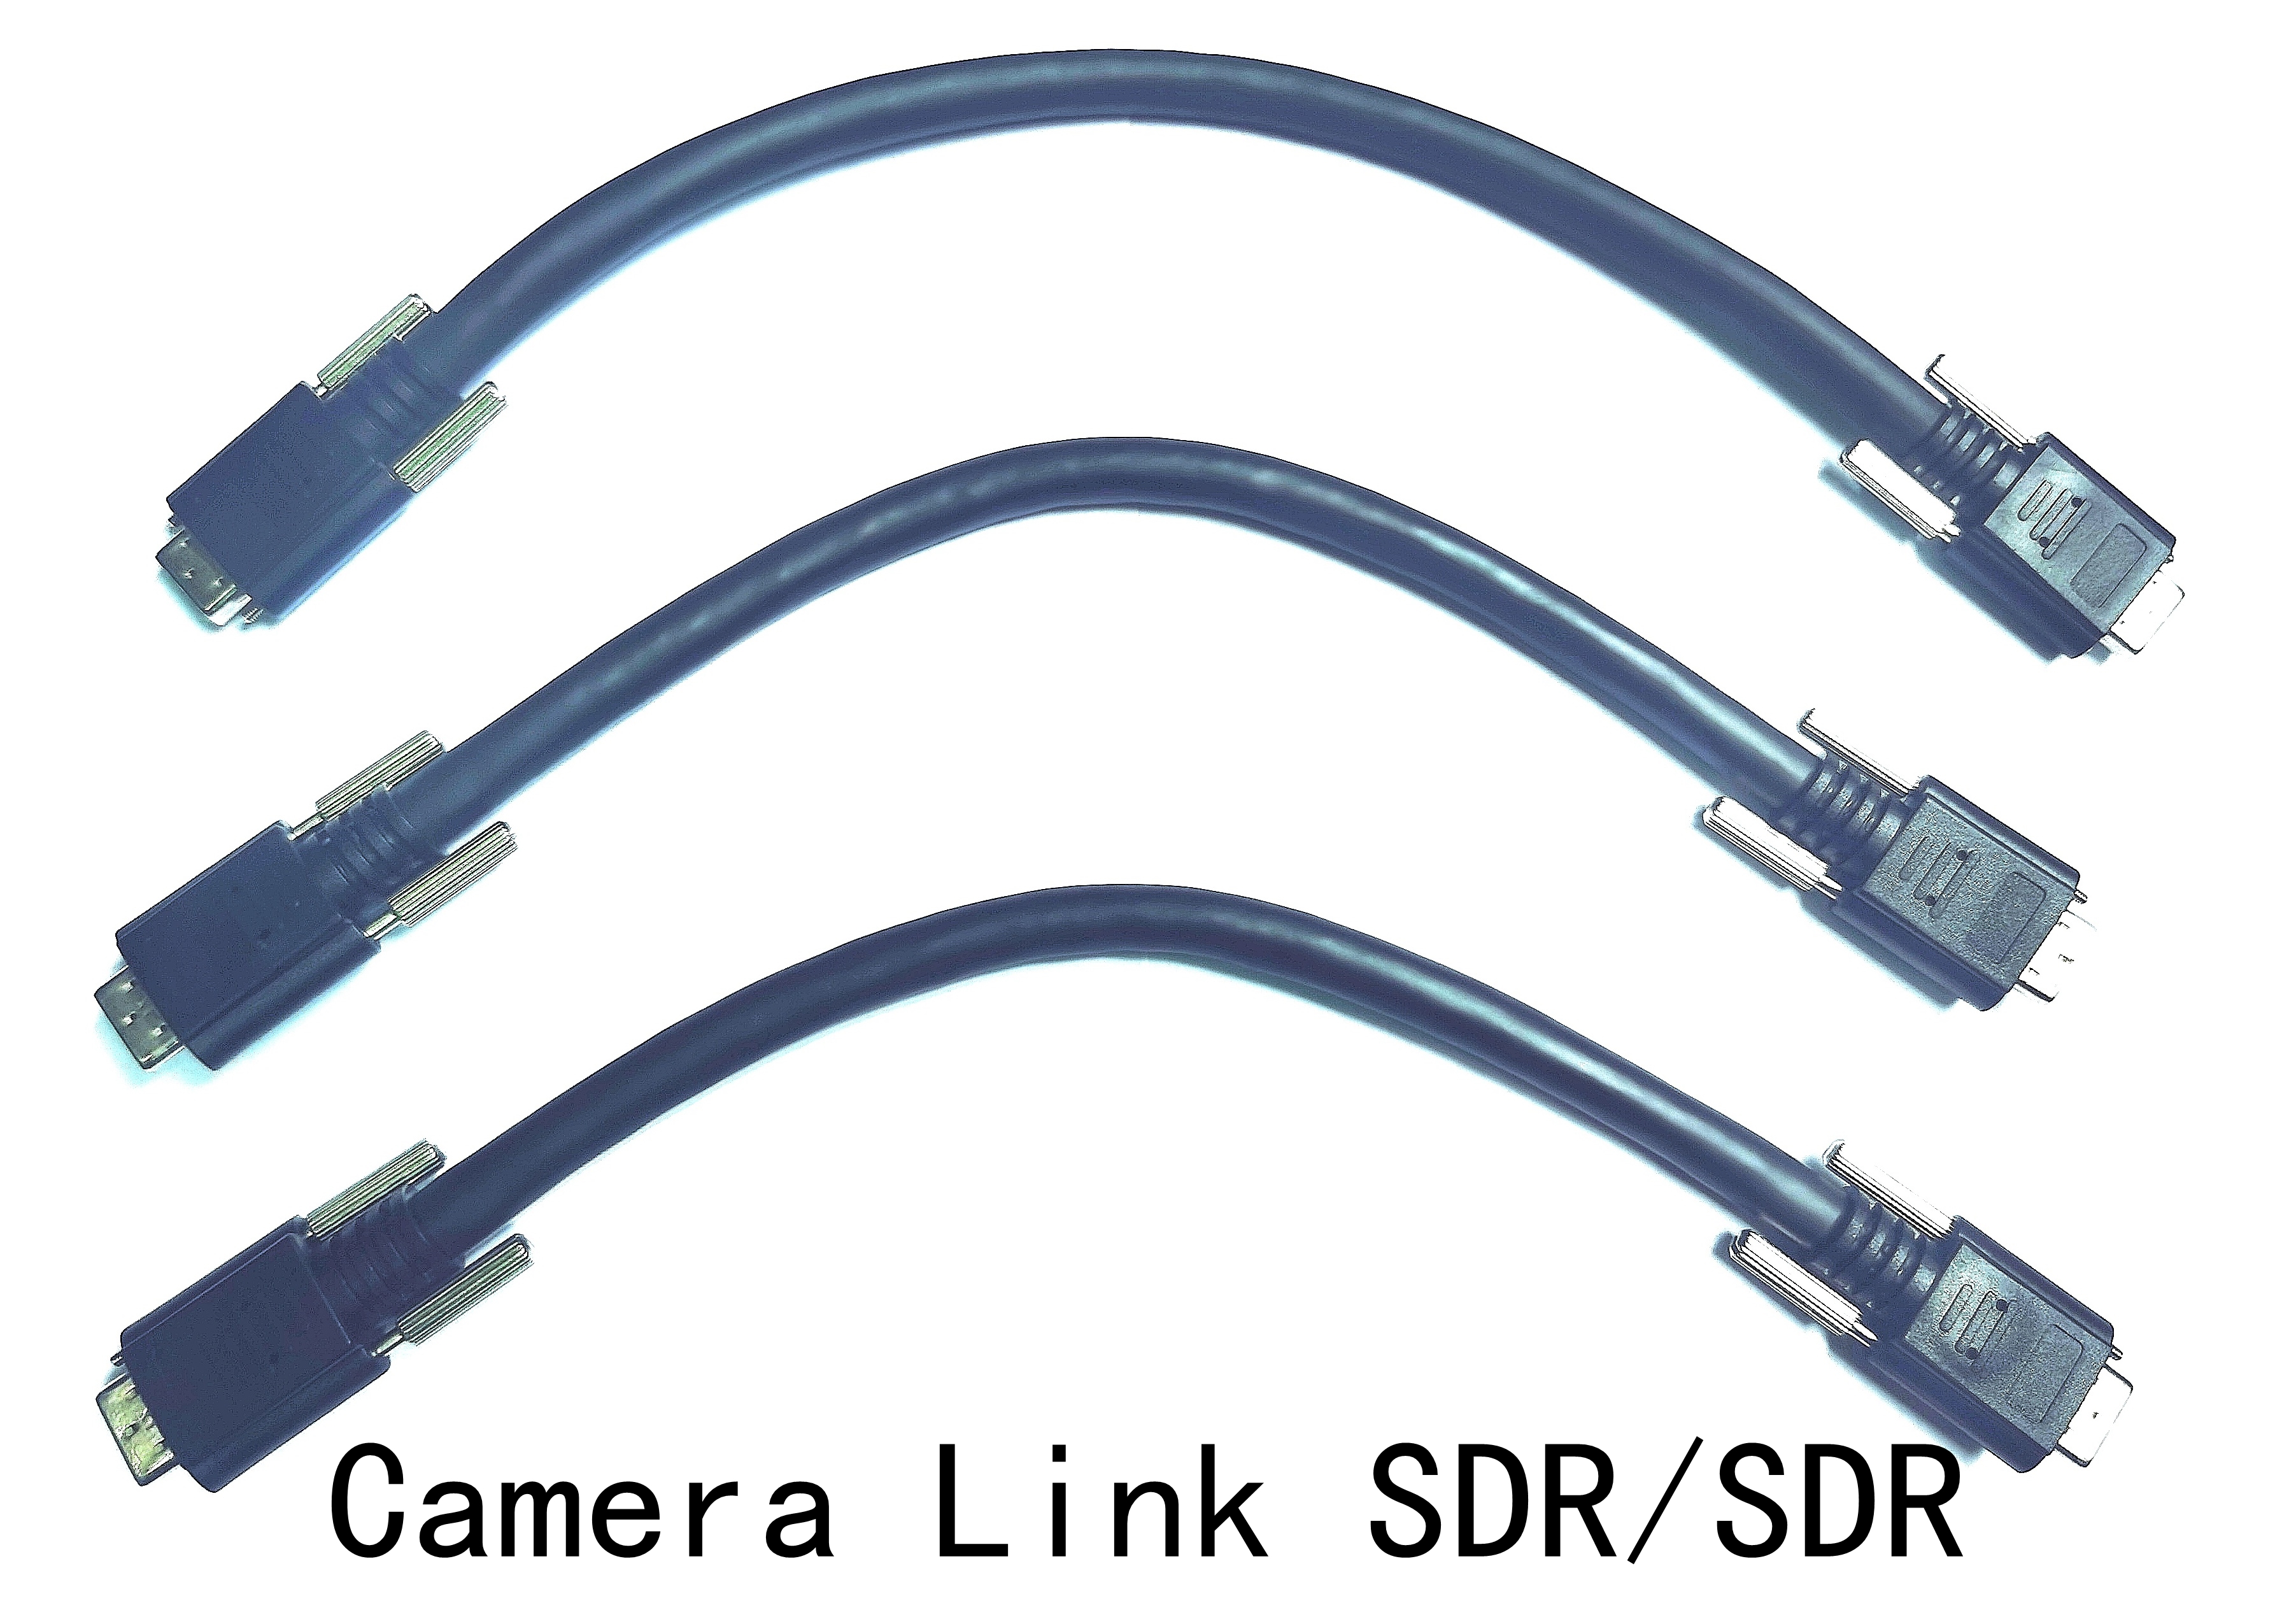 Camera Link SDR/SDR